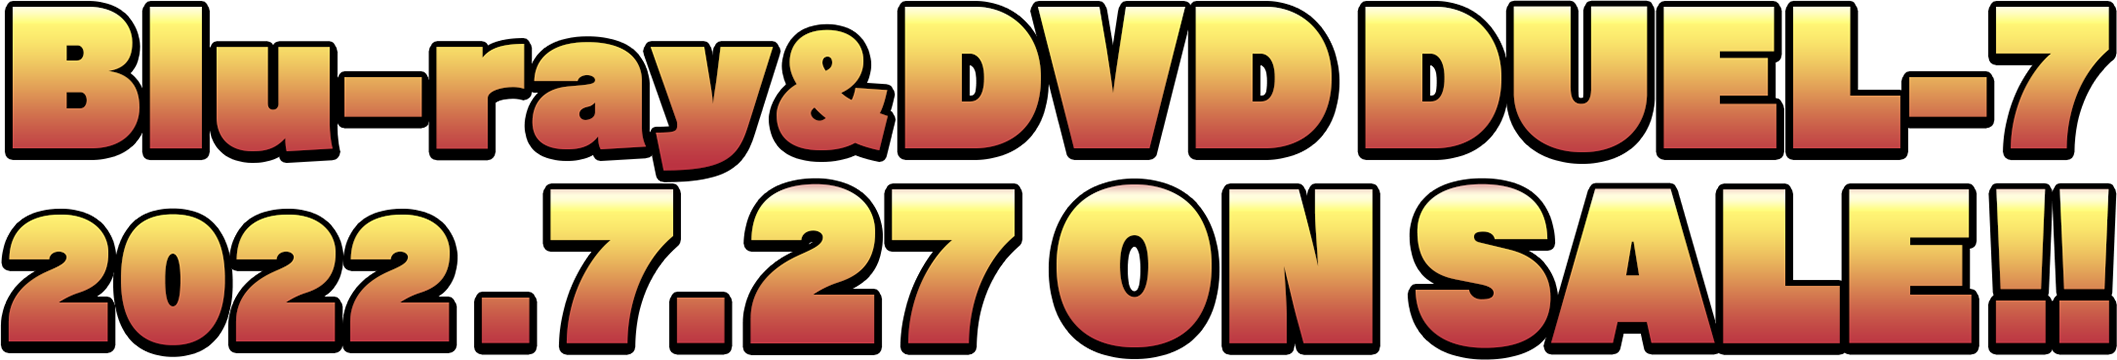 Blu-ray&DVD DUEL-7 2022.7.27 ON SALE!!